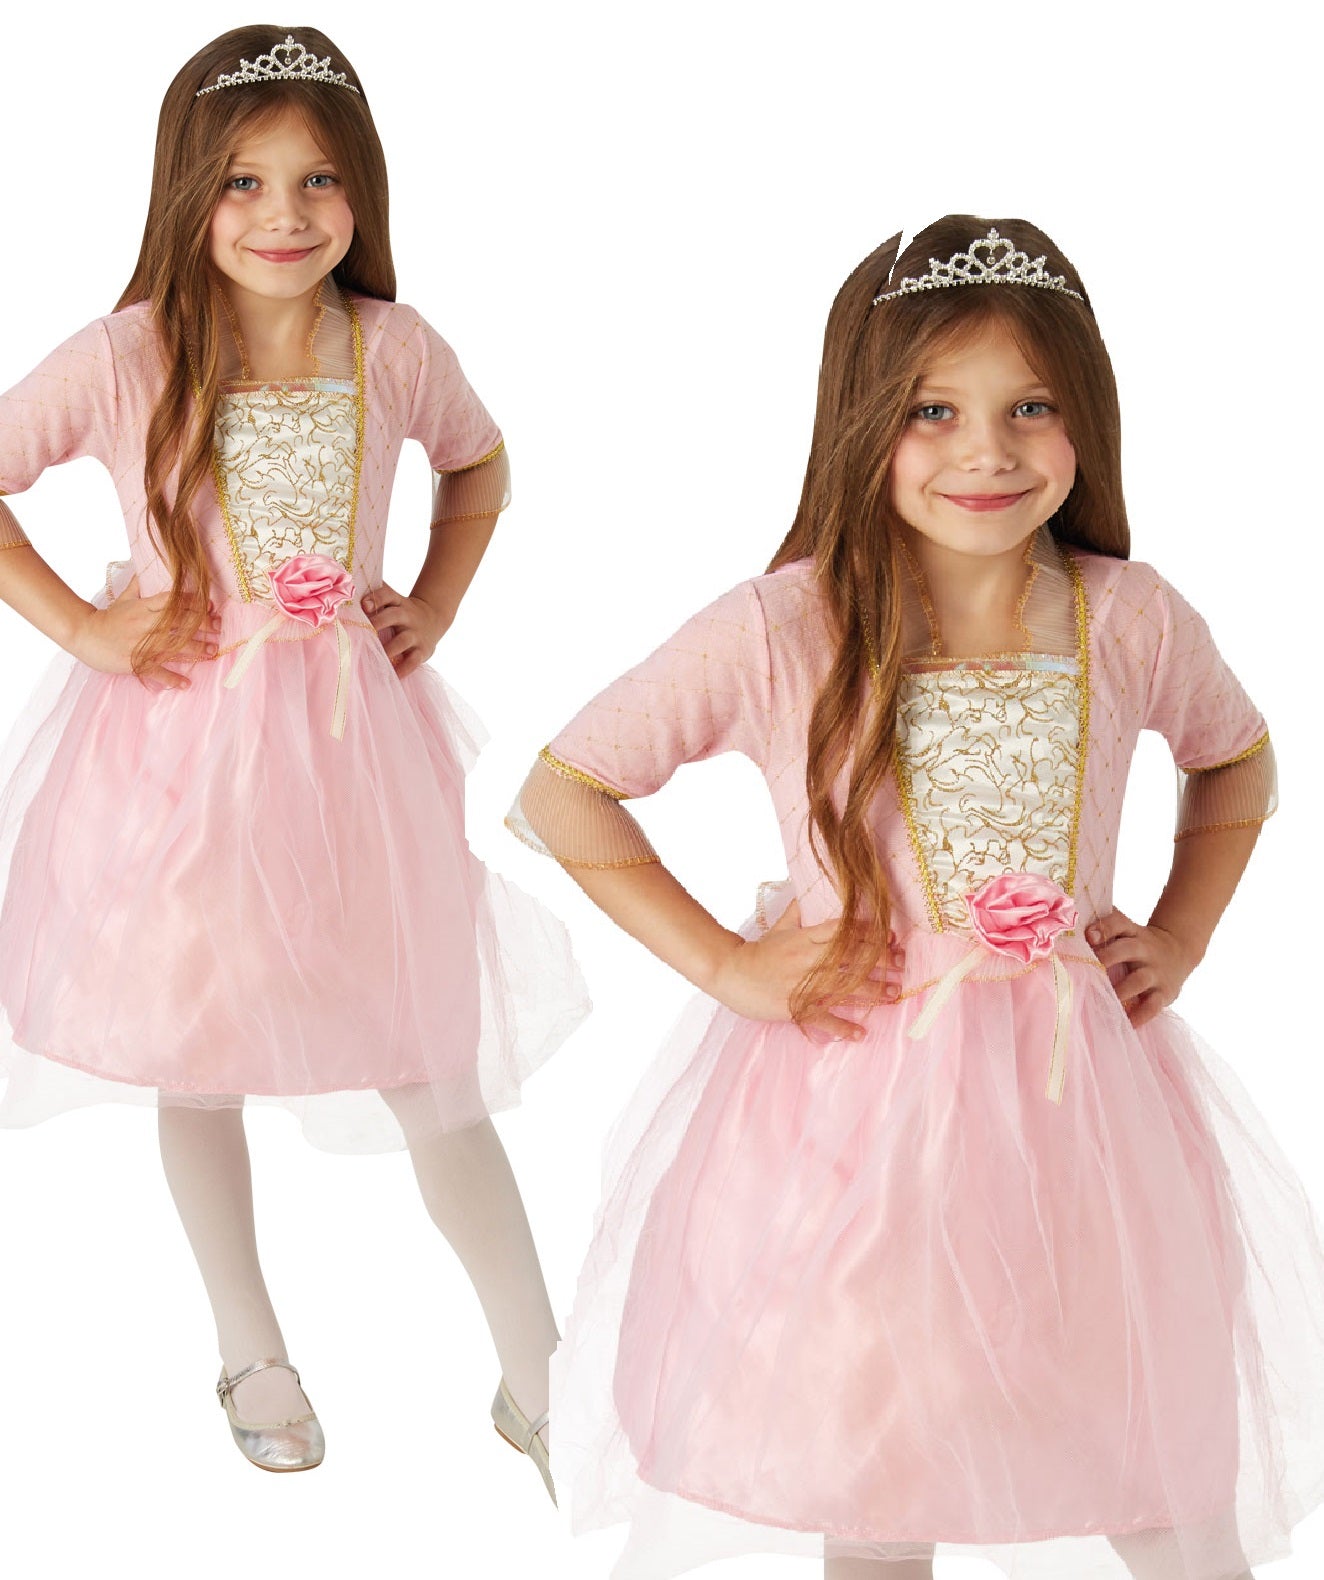 Twinkler Rose Princess Costume